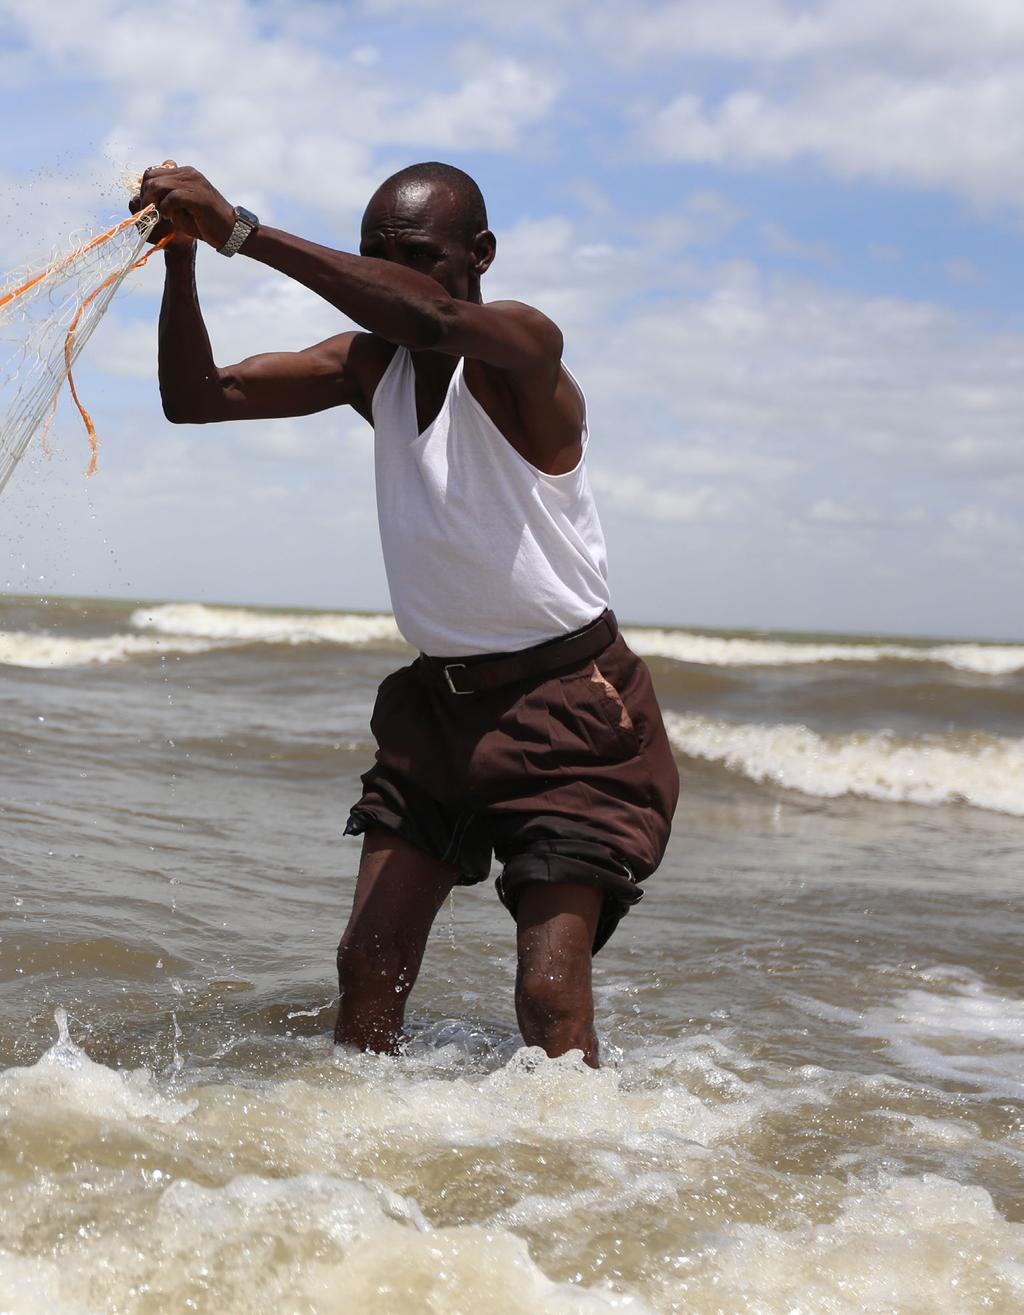 Peter a fisherman and trader, fishing in Lake Turkana Photo: Brian Inganga/Oxfam Front cover photo: The women